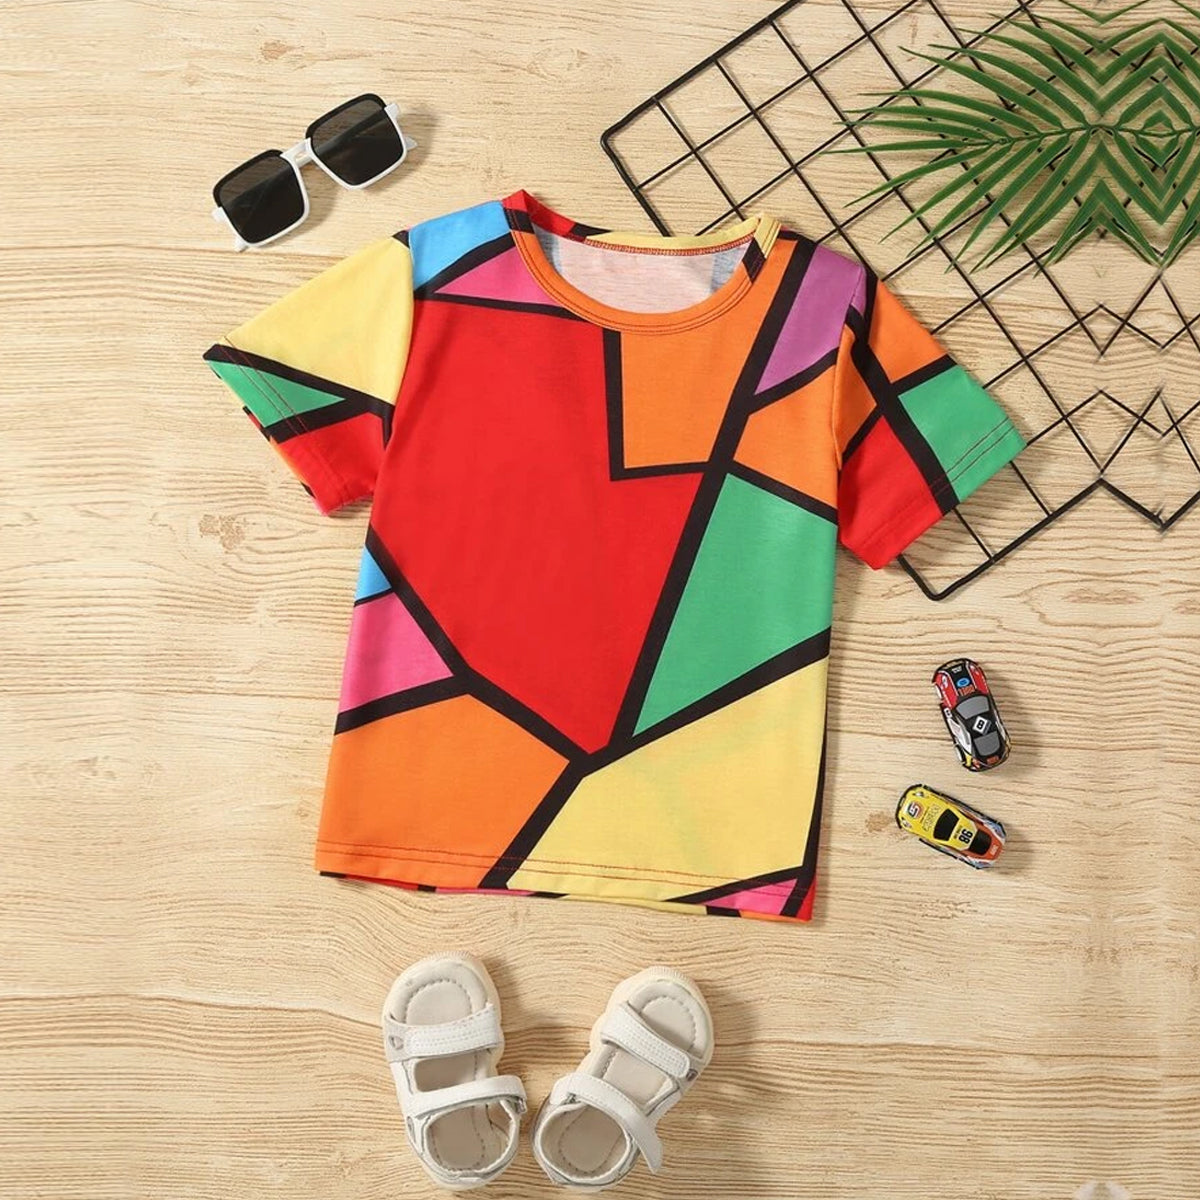 VENUTALOZA Boy's Plus Color Block & Round Neck Stripe (Combo Pack of 2) T-shirt For Boy's.